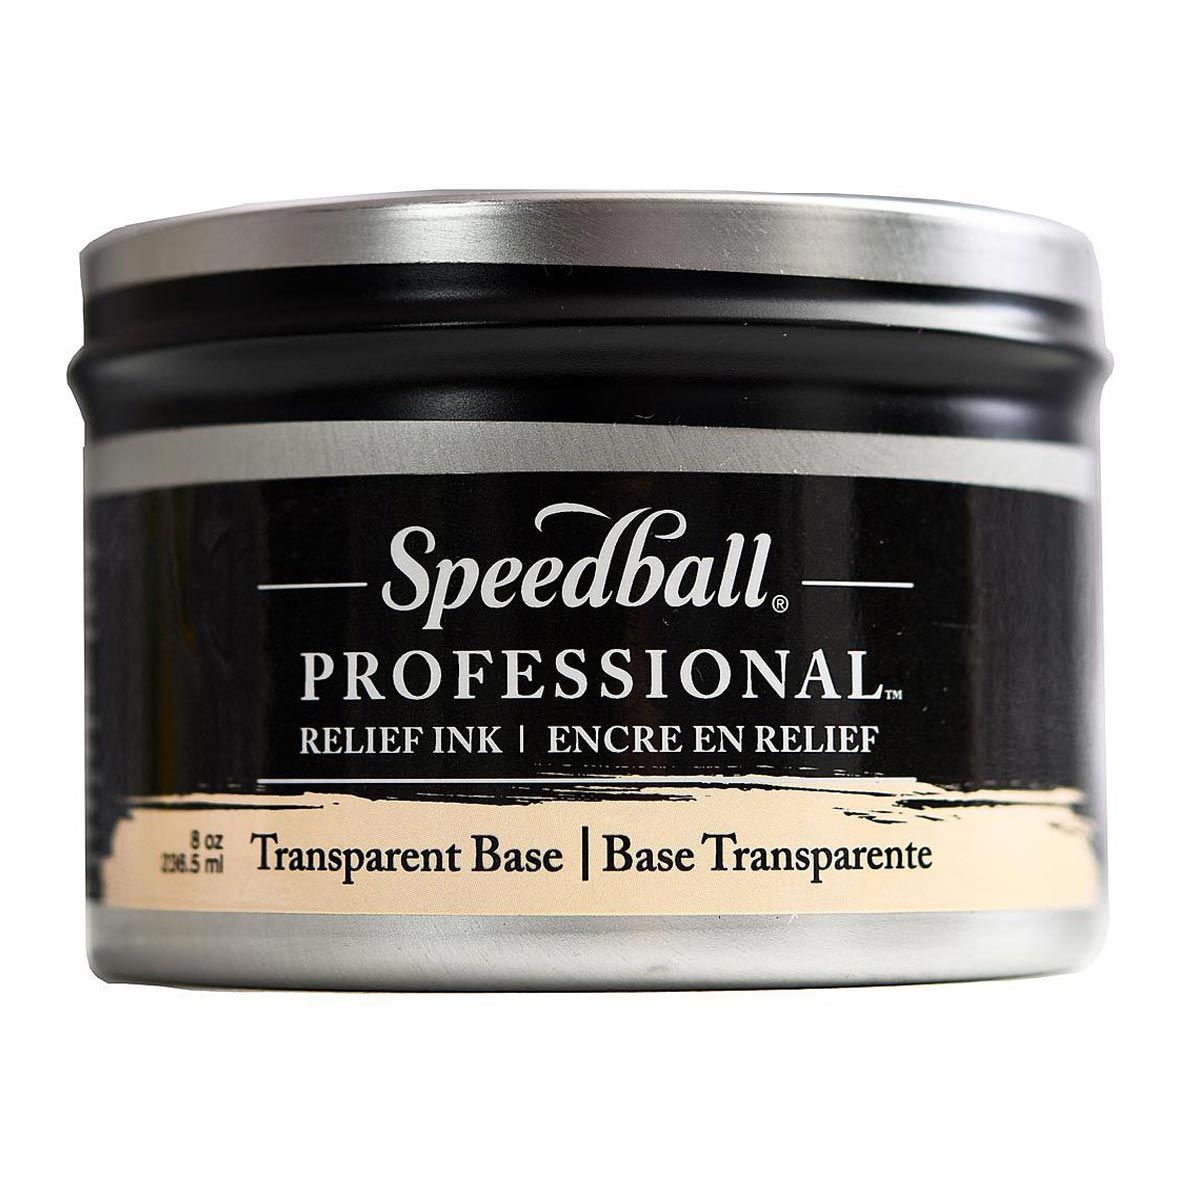 Speedball Professional Relief Ink - Transparent Base 8 oz